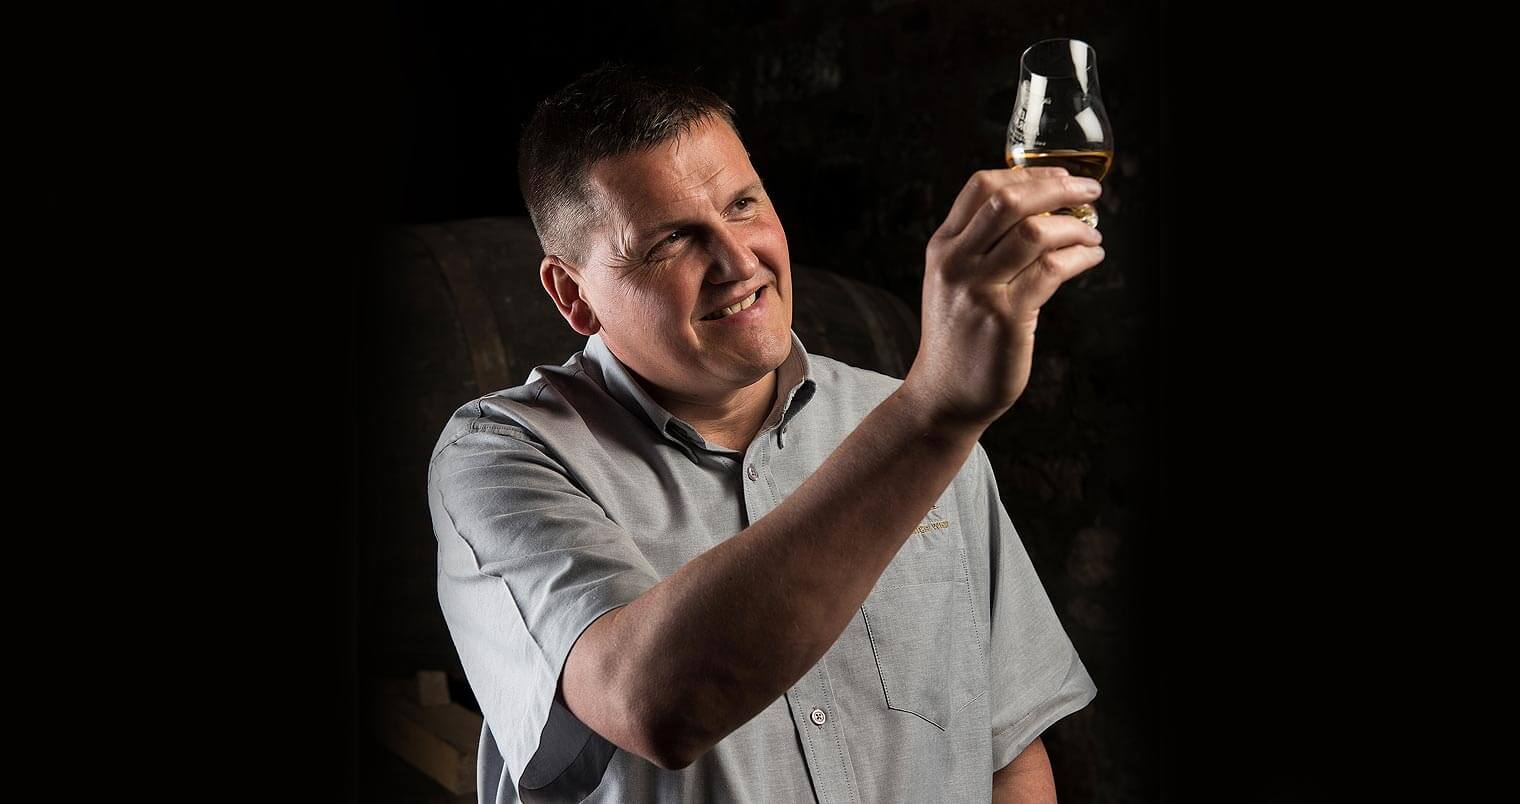 Graham Coull, master distiller, glen moray distillery, featured image